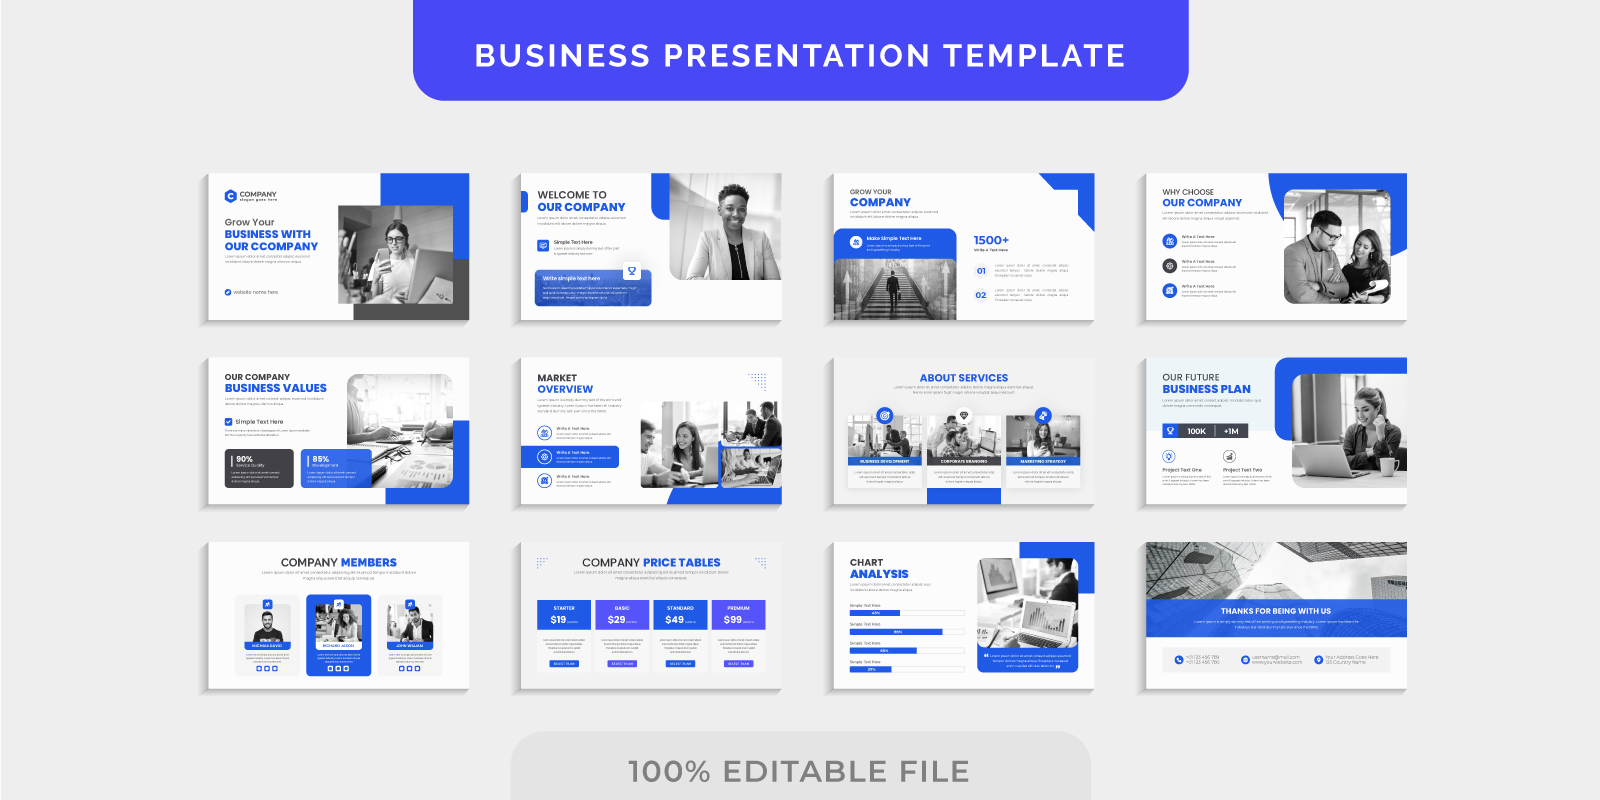 Creative Corporate Marketing business presentation slides template